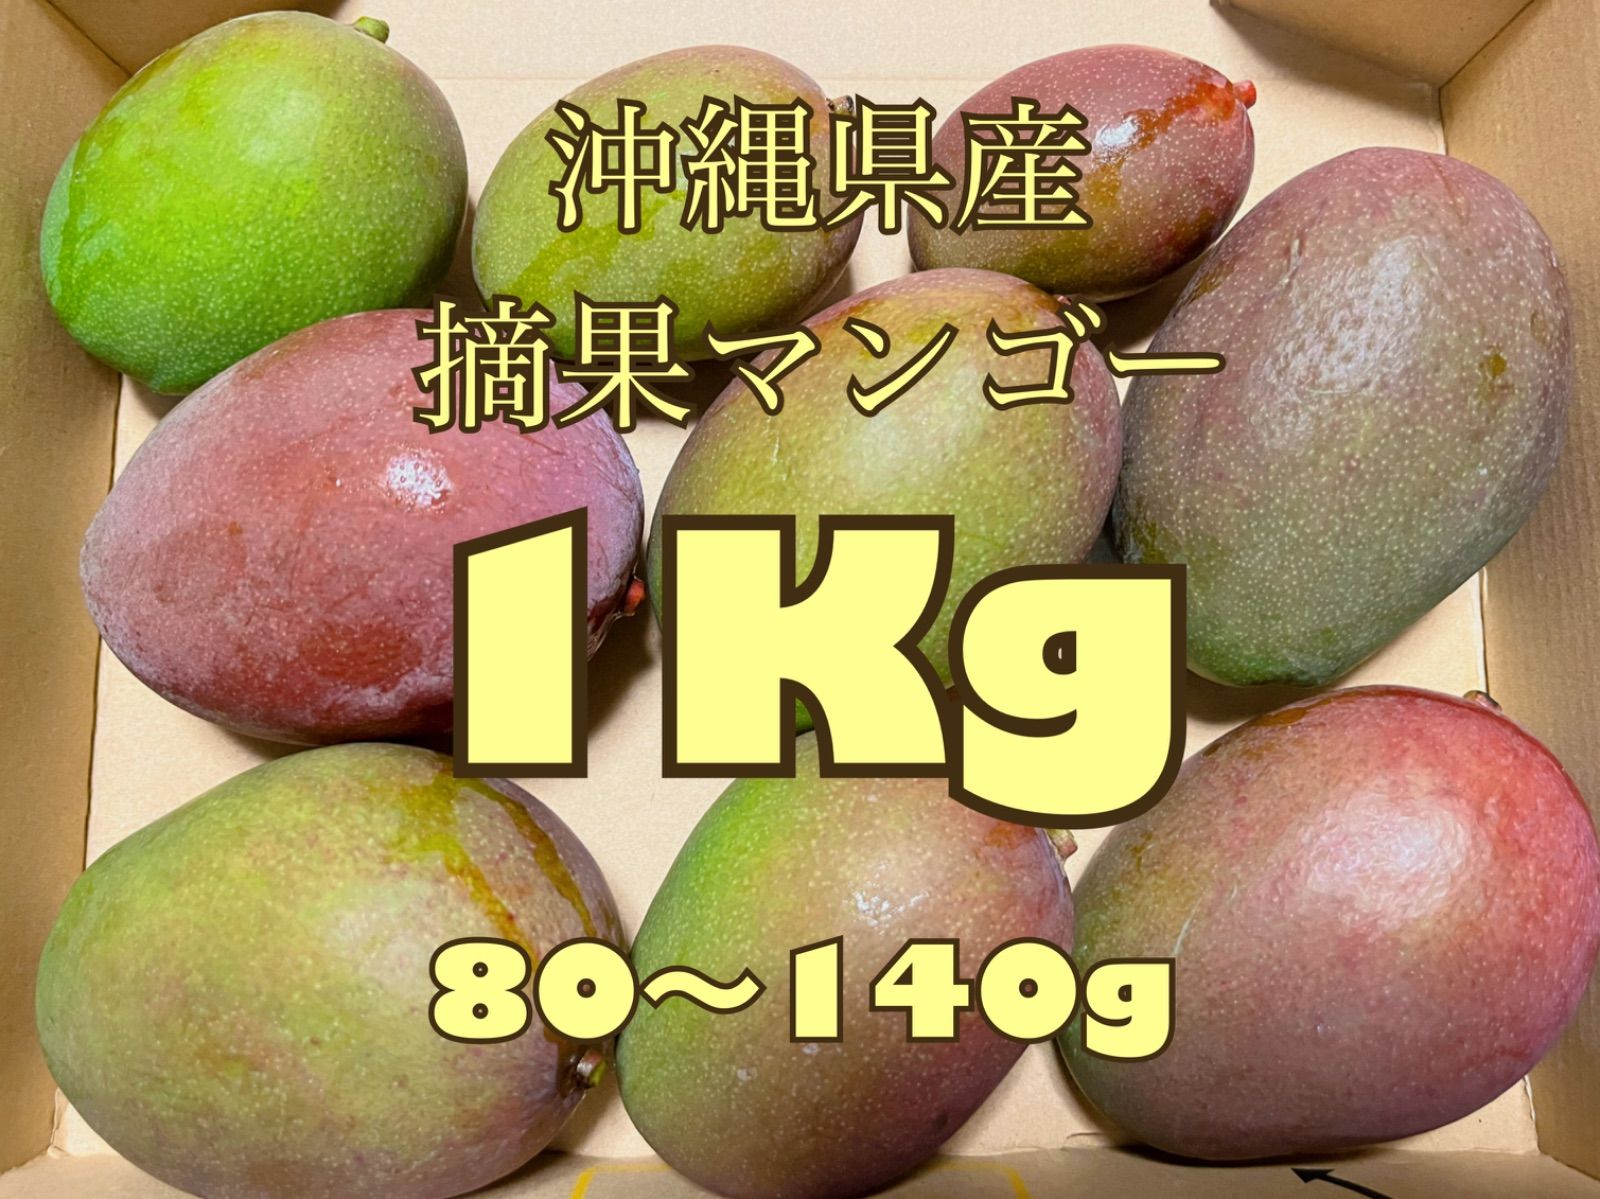 直営店限定 摘果マンゴー13kg - 食品